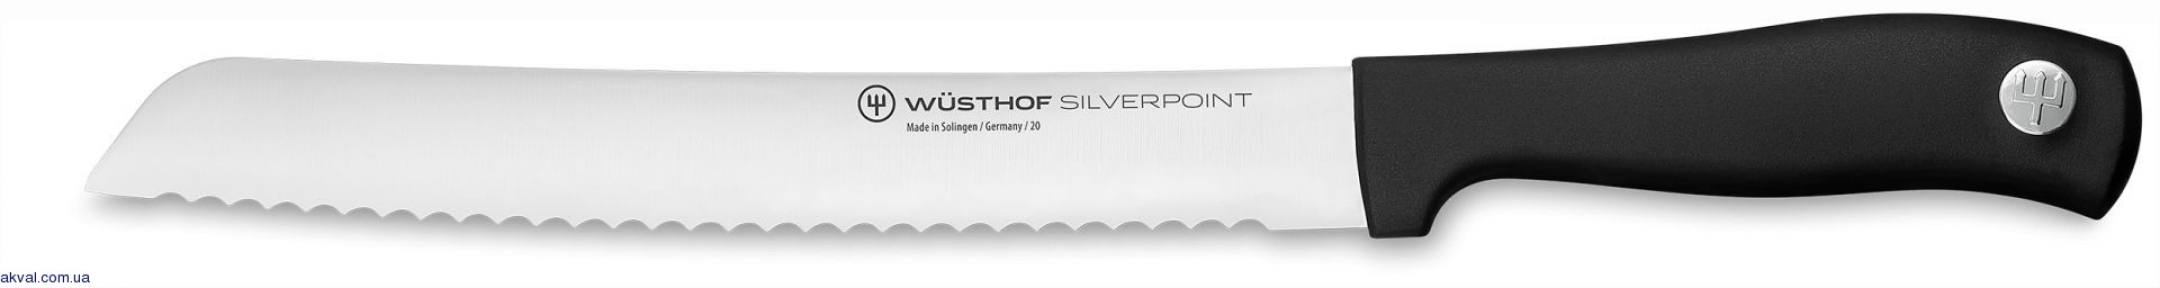 Нож для хлеба Wuesthof Silverpoint, 20 см (11025145720)